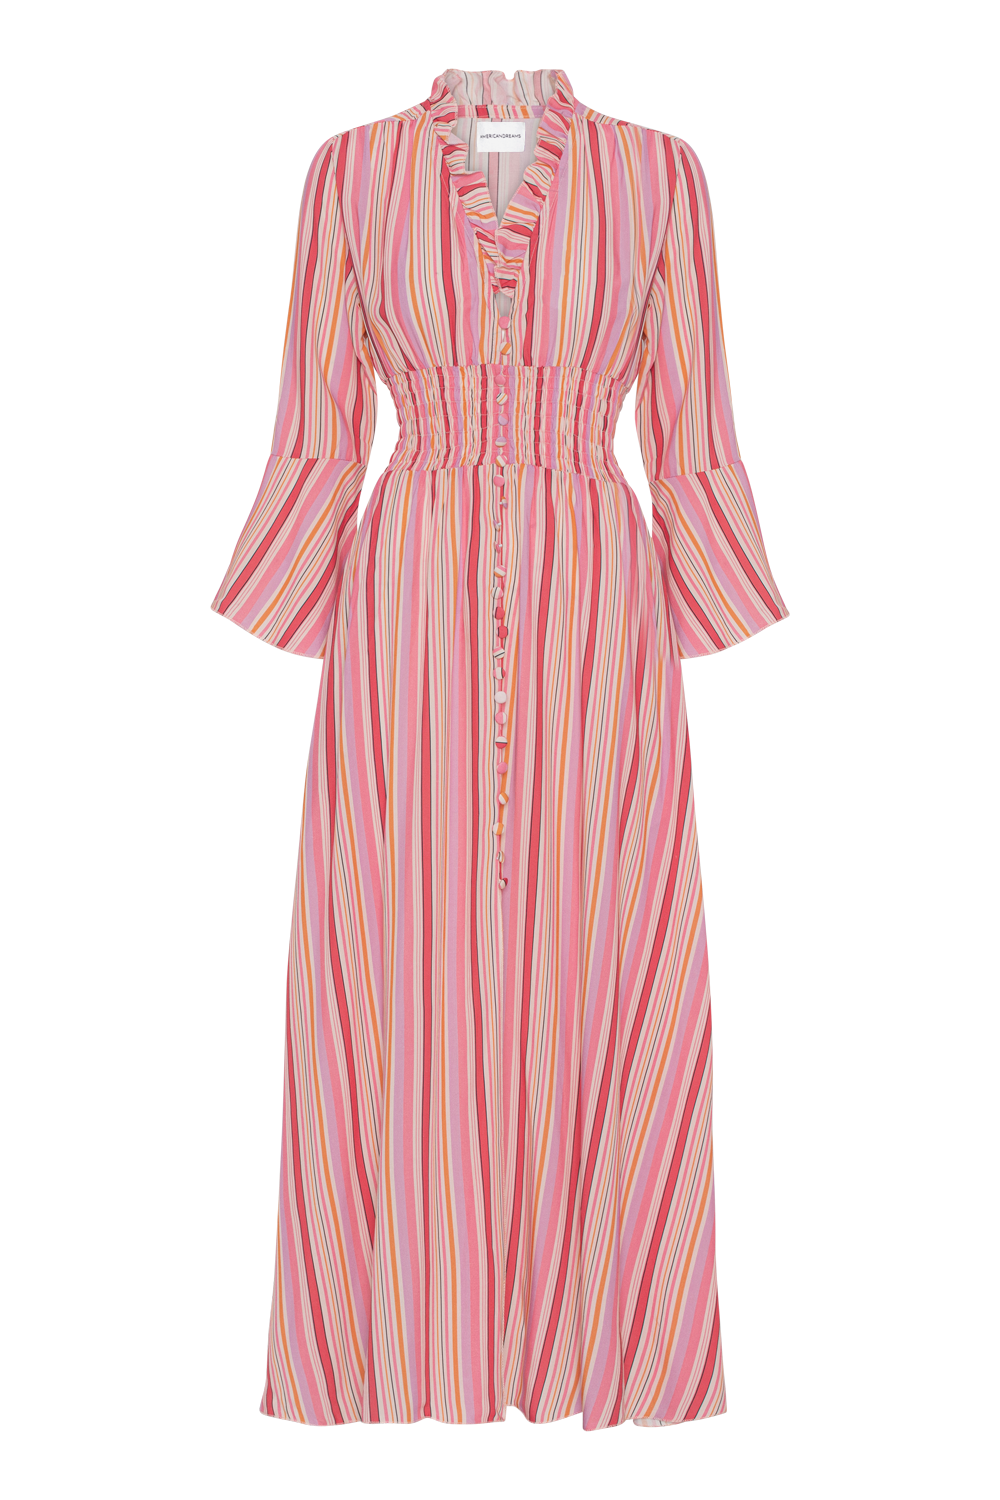 Sally Long Dress Multi Striped Pink